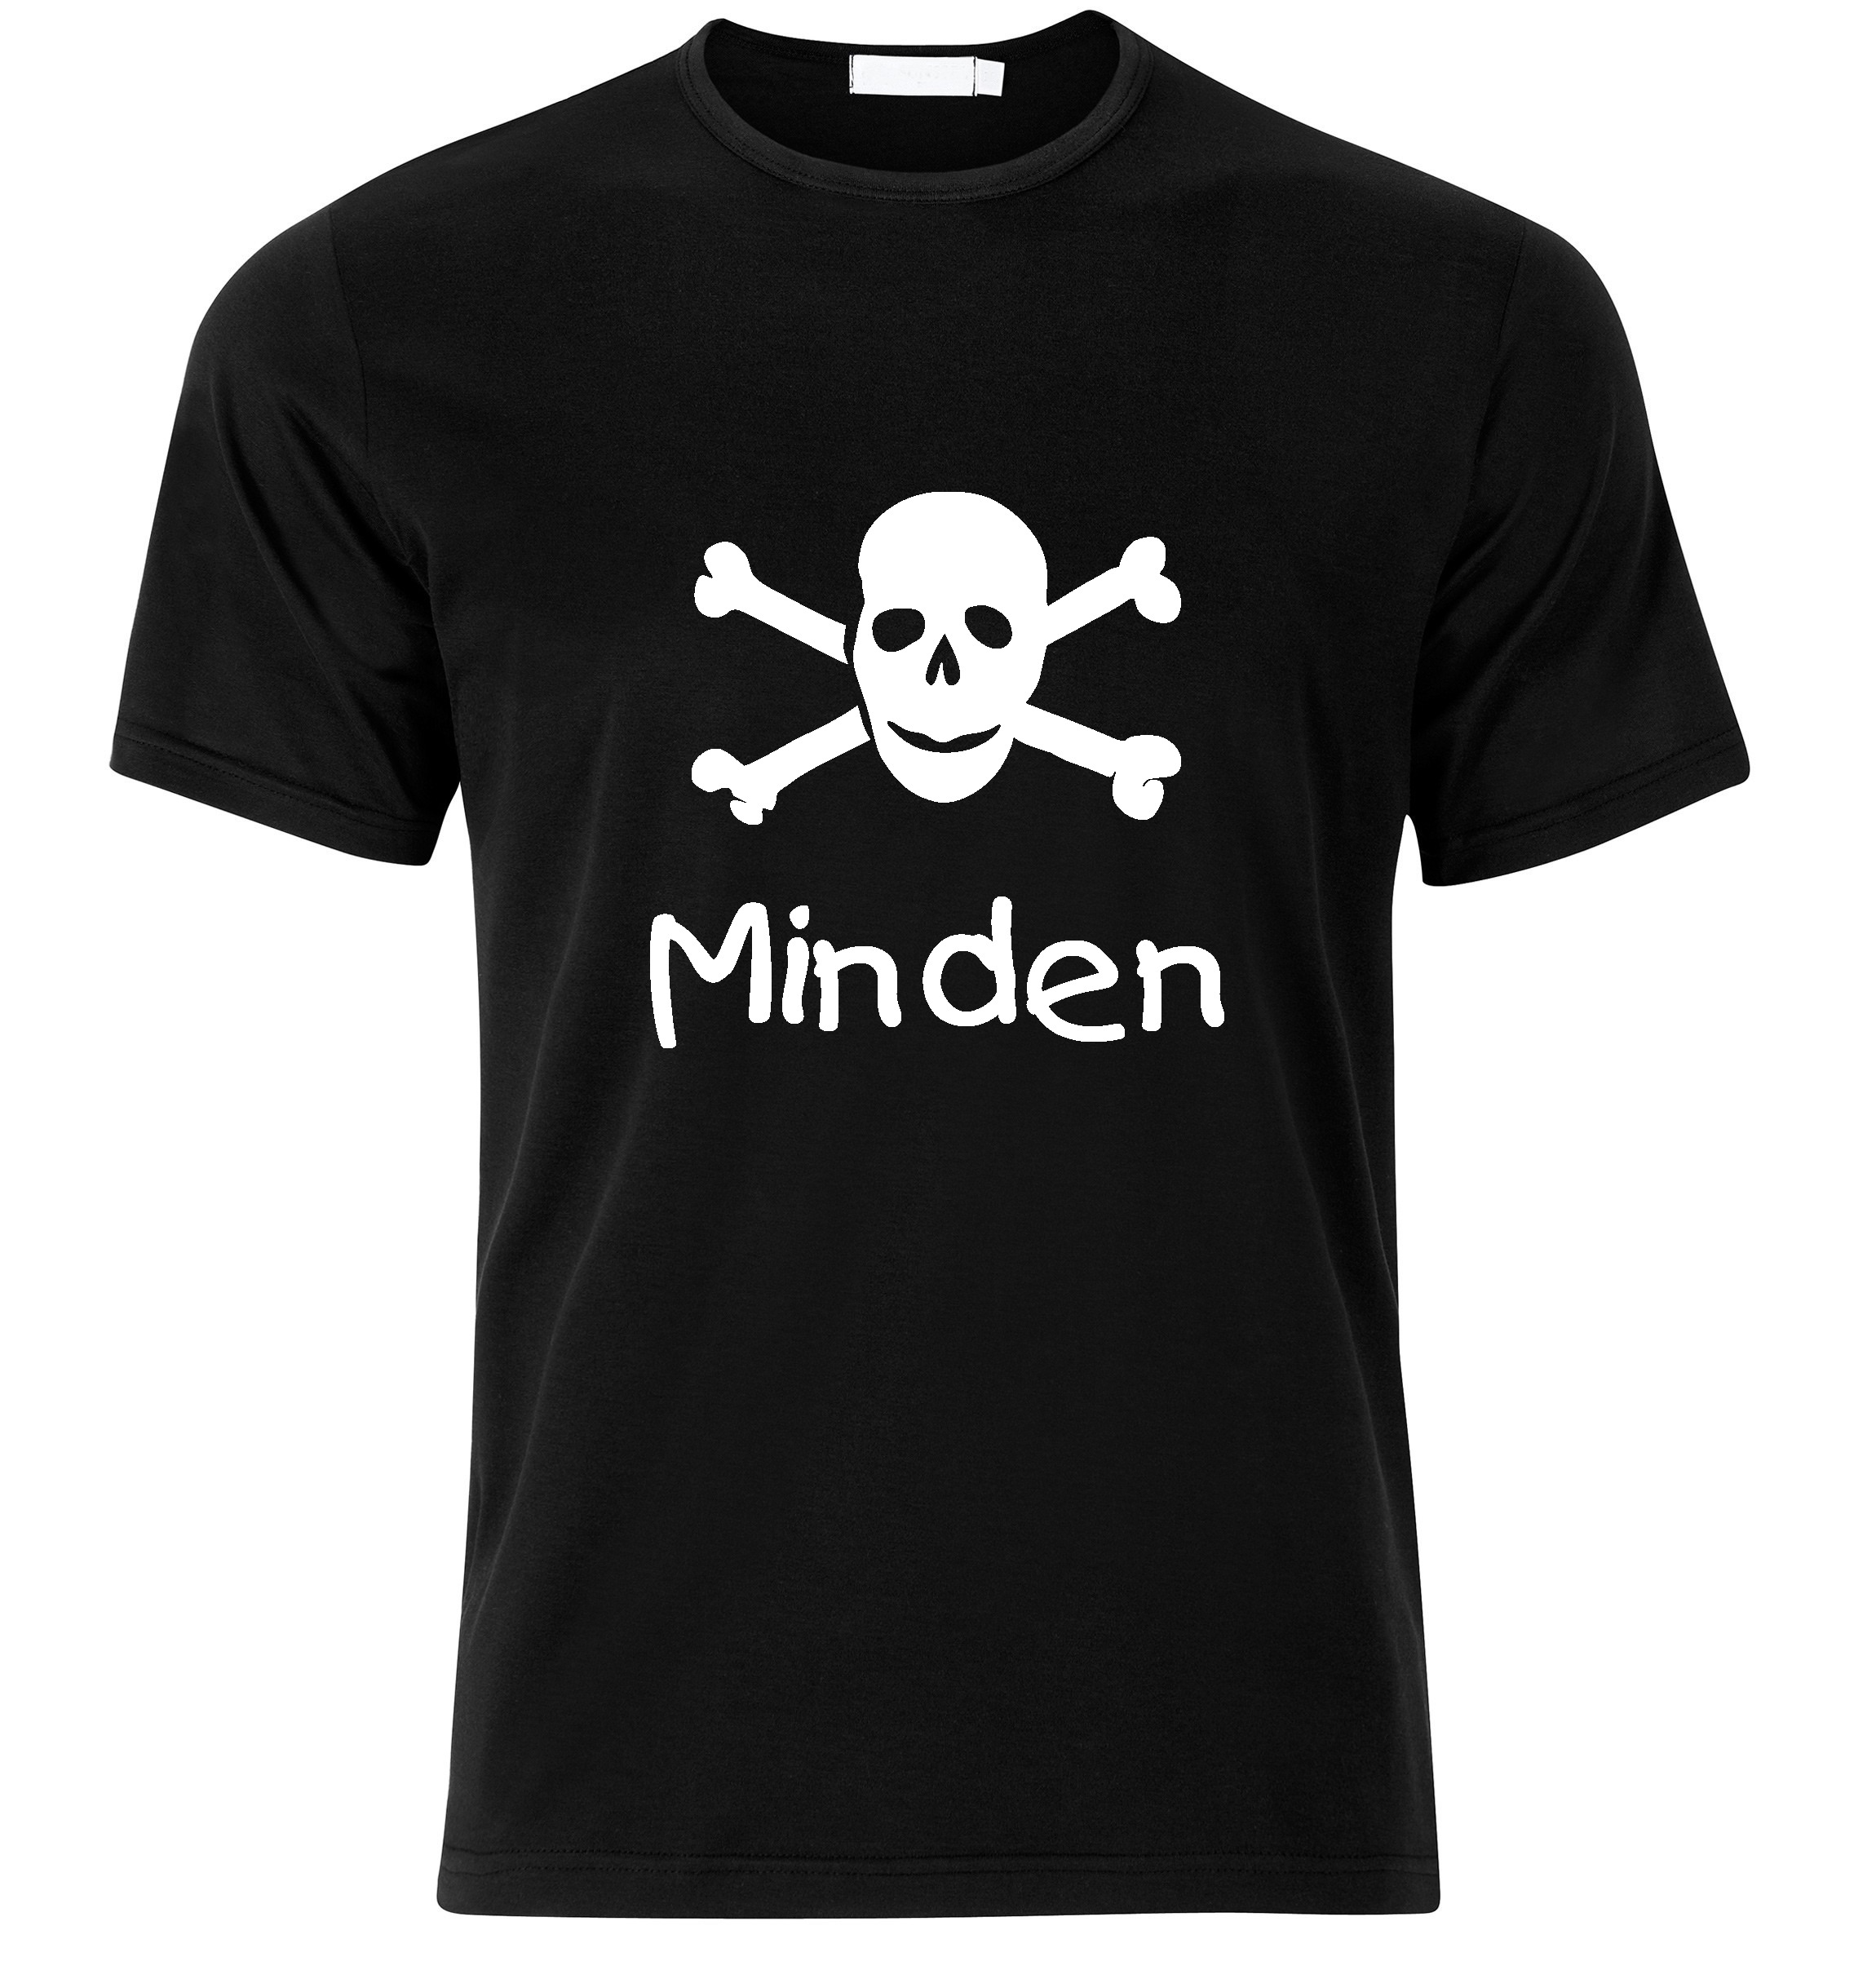 T-Shirt Minden Jolly Roger, Totenkopf